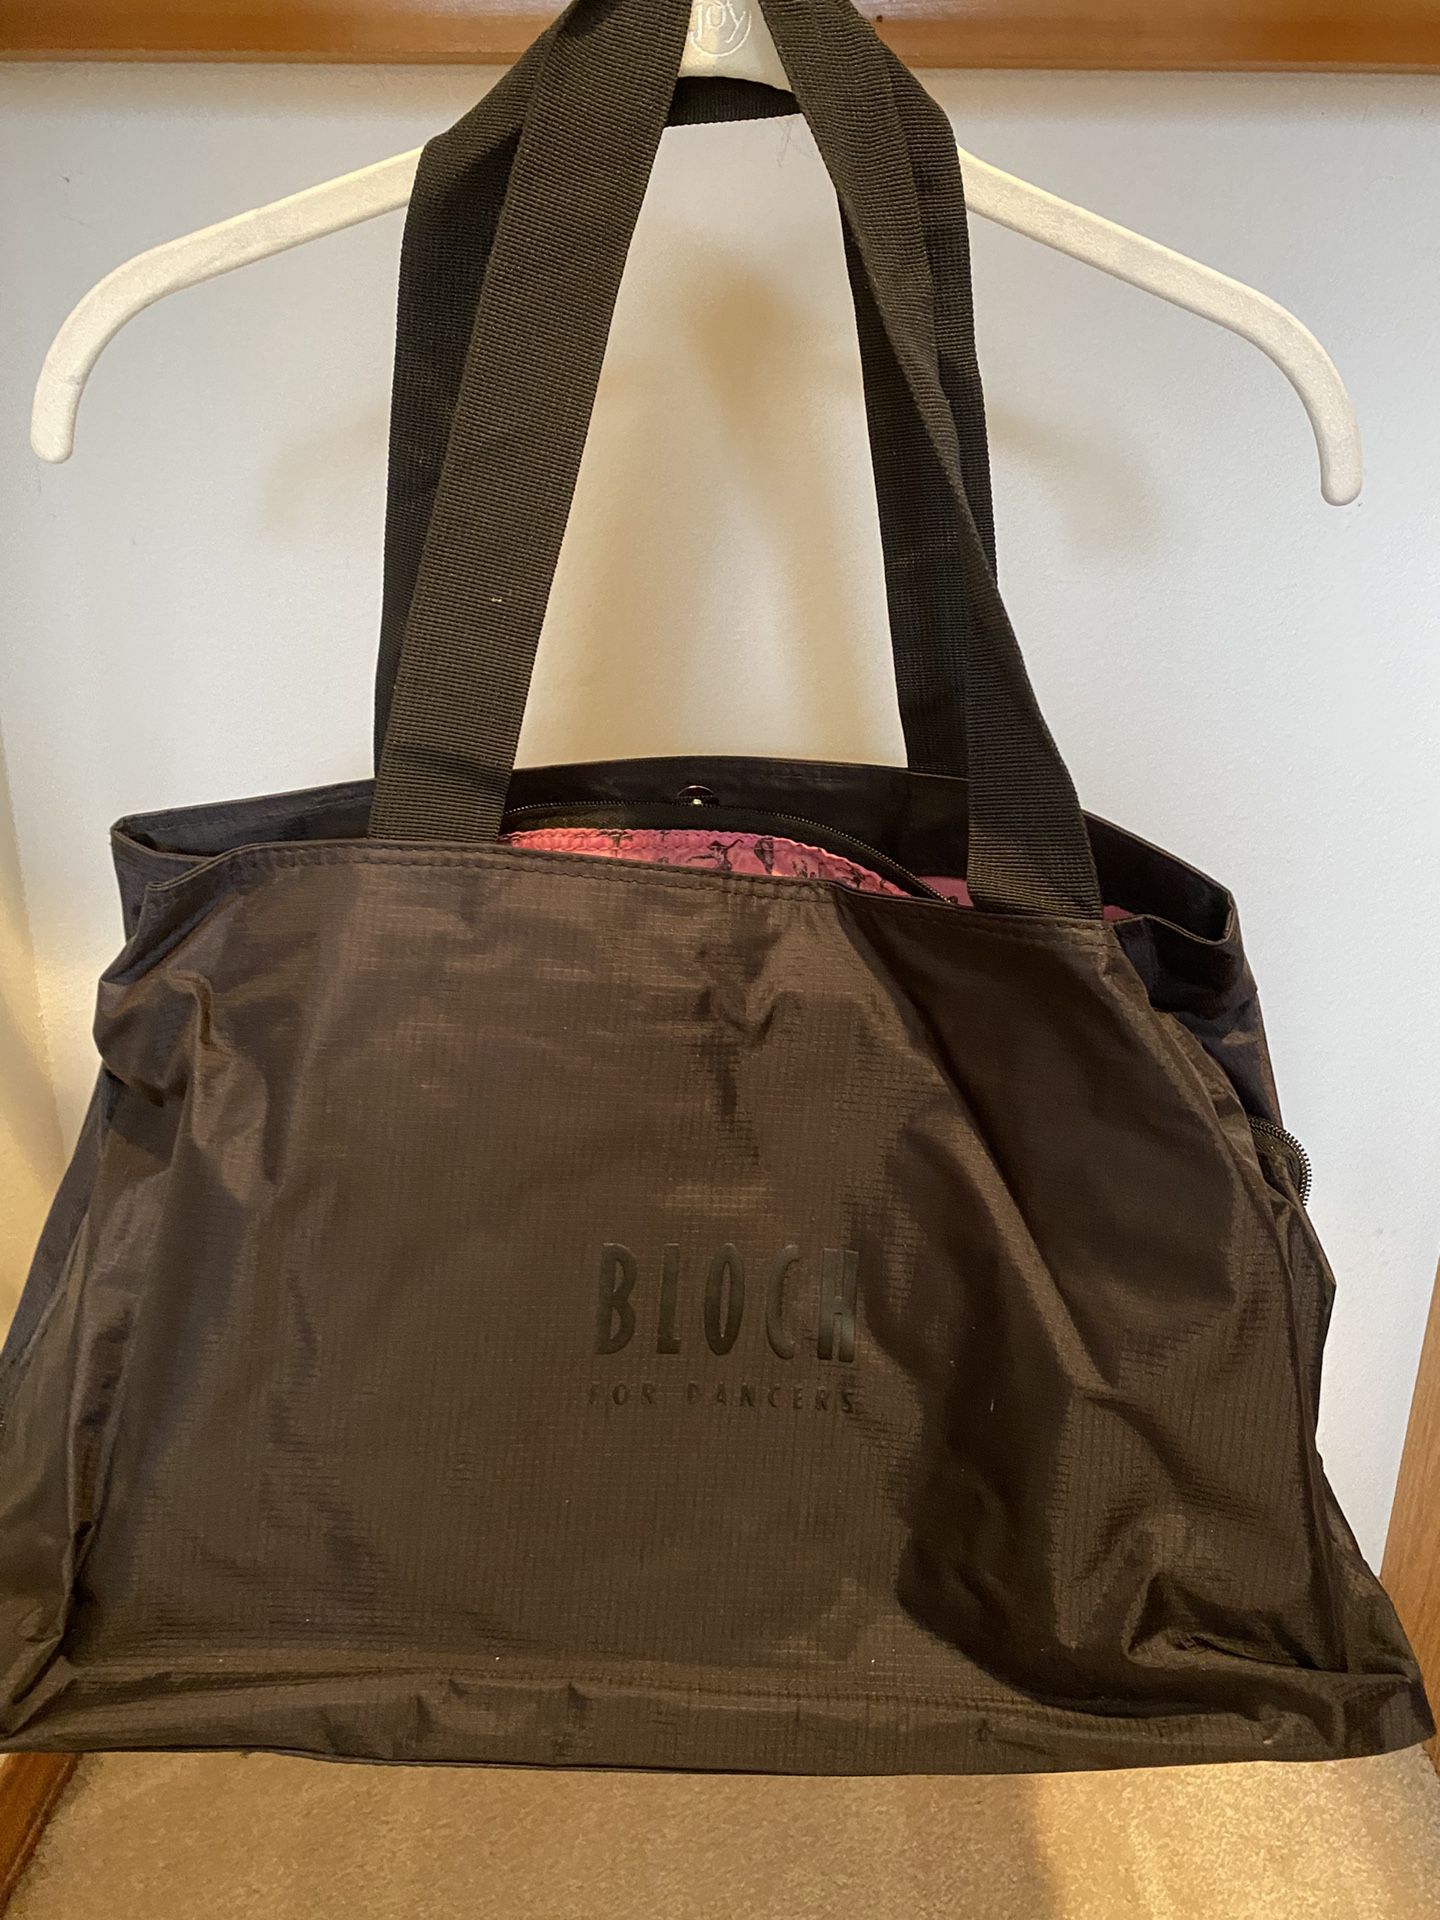 Bloch Dance Bag